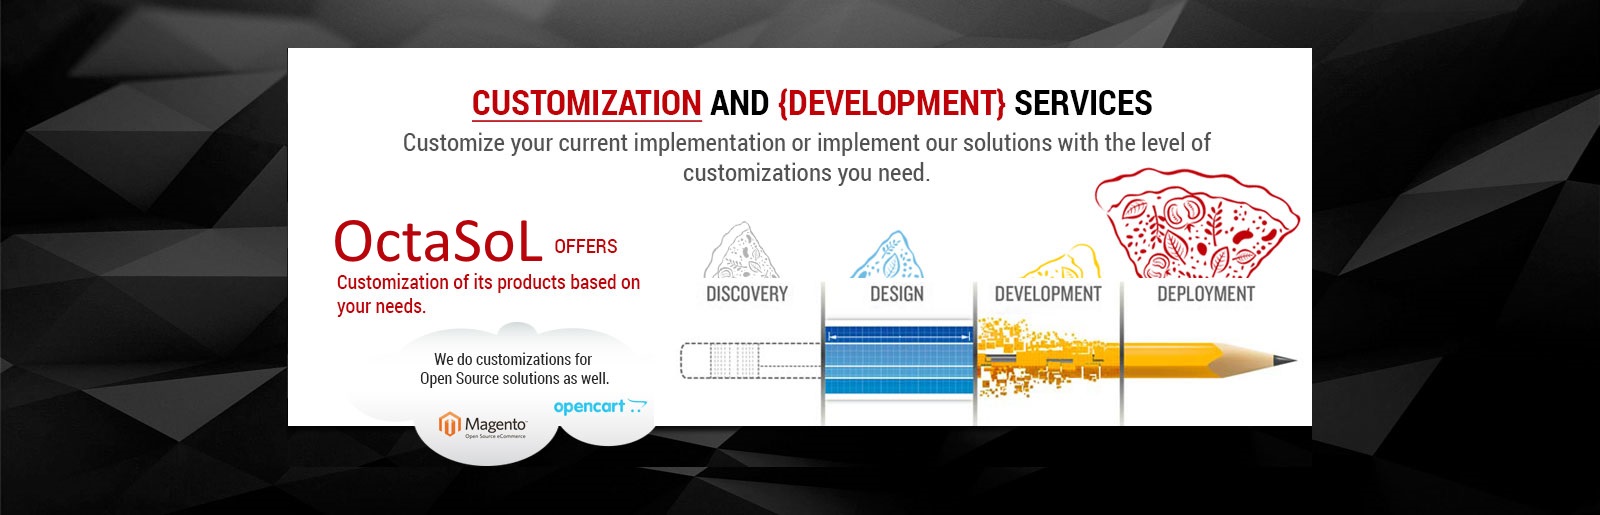 Customization and Development Services